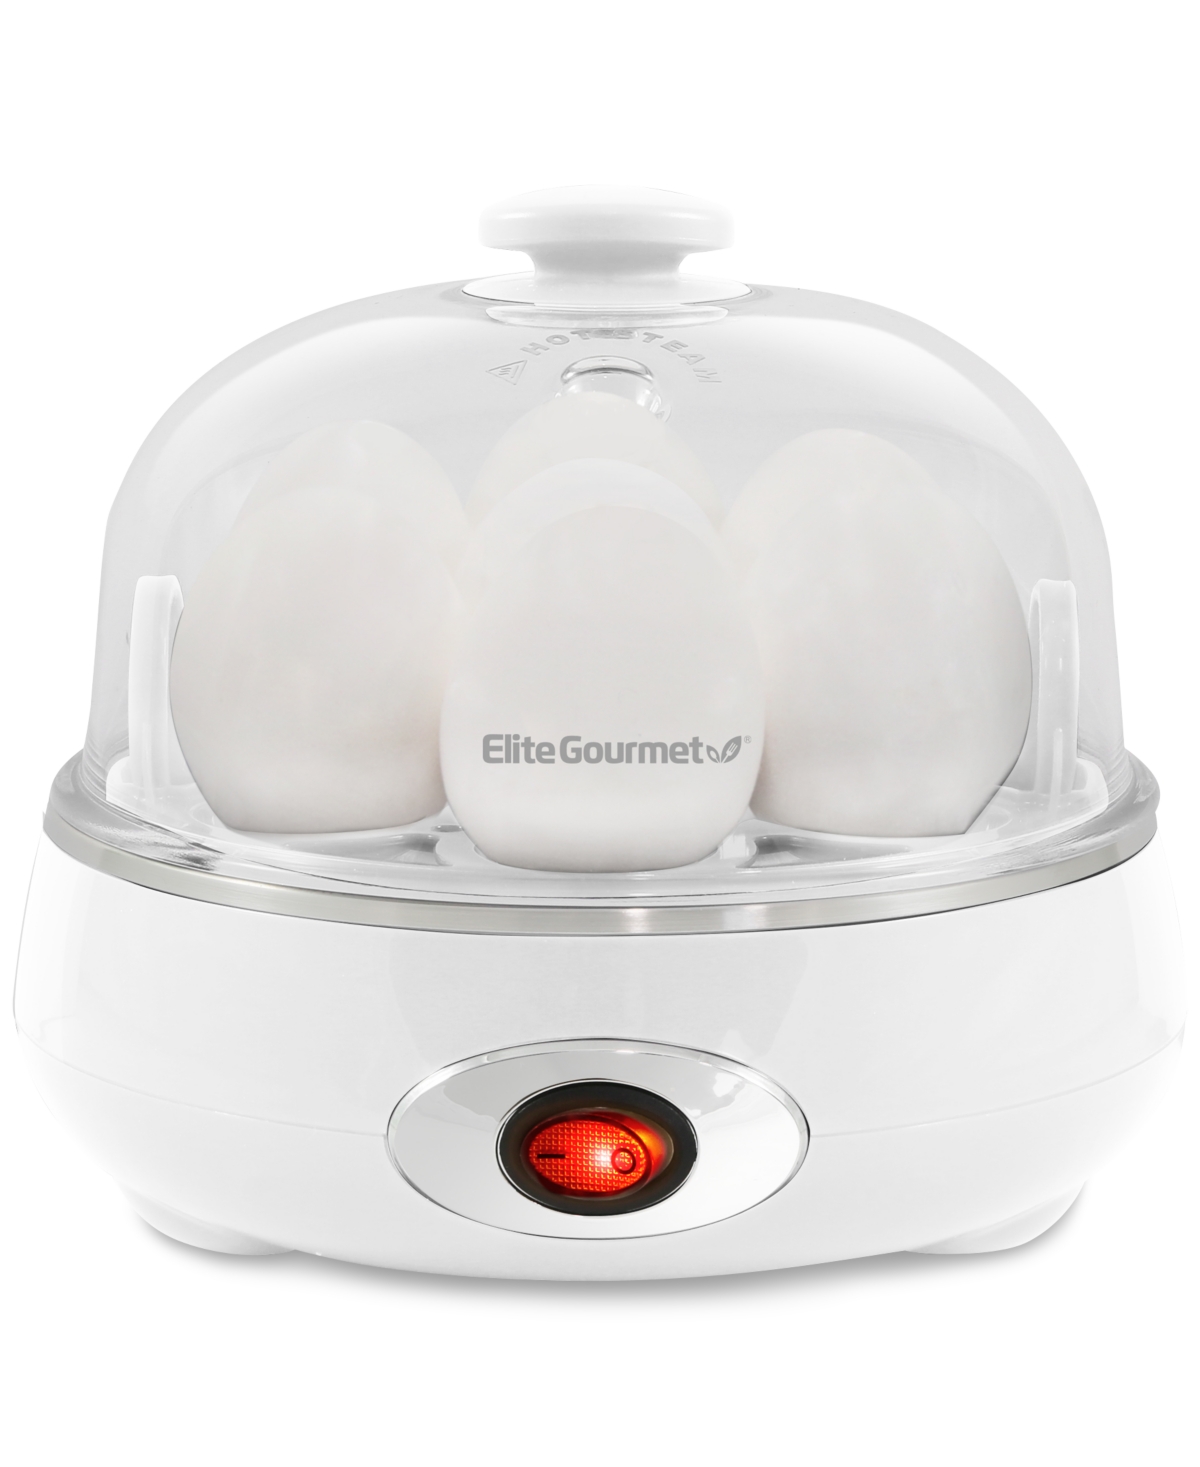 Elite Gourmet Automatic 2-Tier Egg Cooker/Steamer